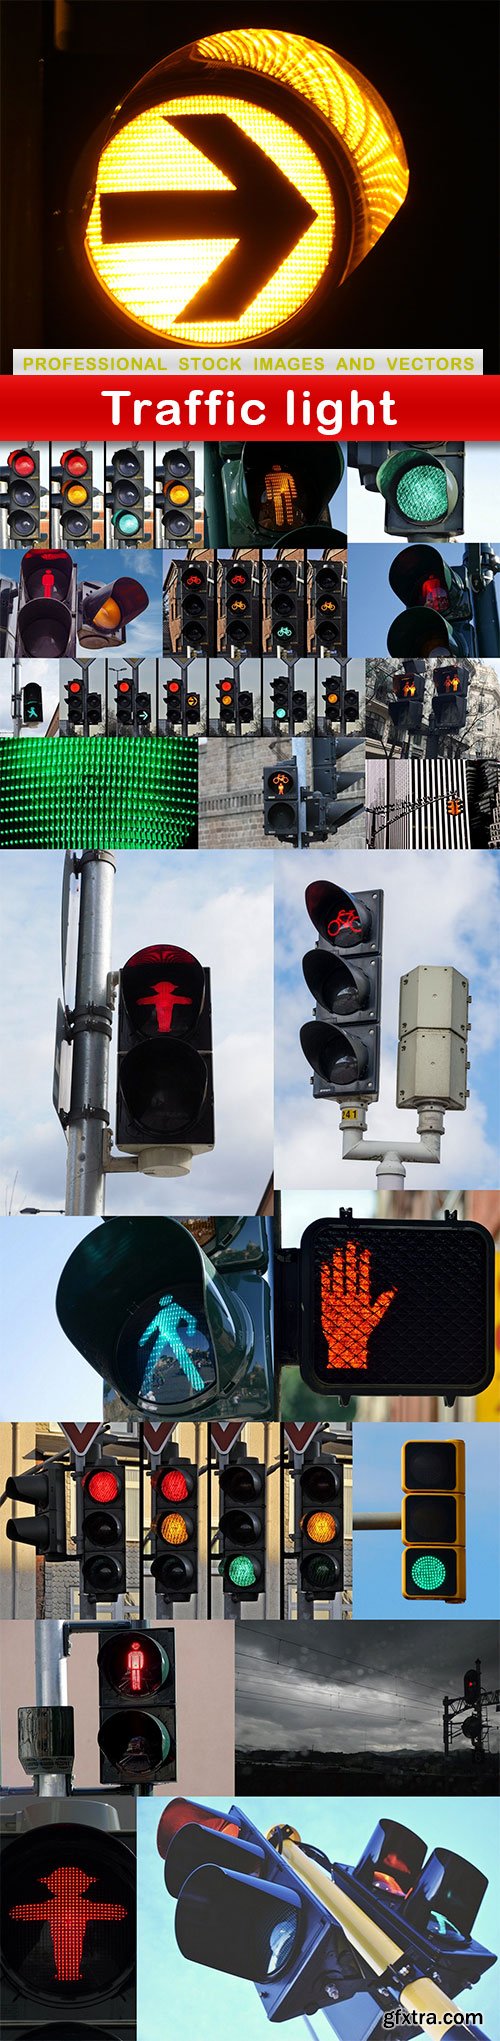 Traffic light - 23 UHQ JPEG